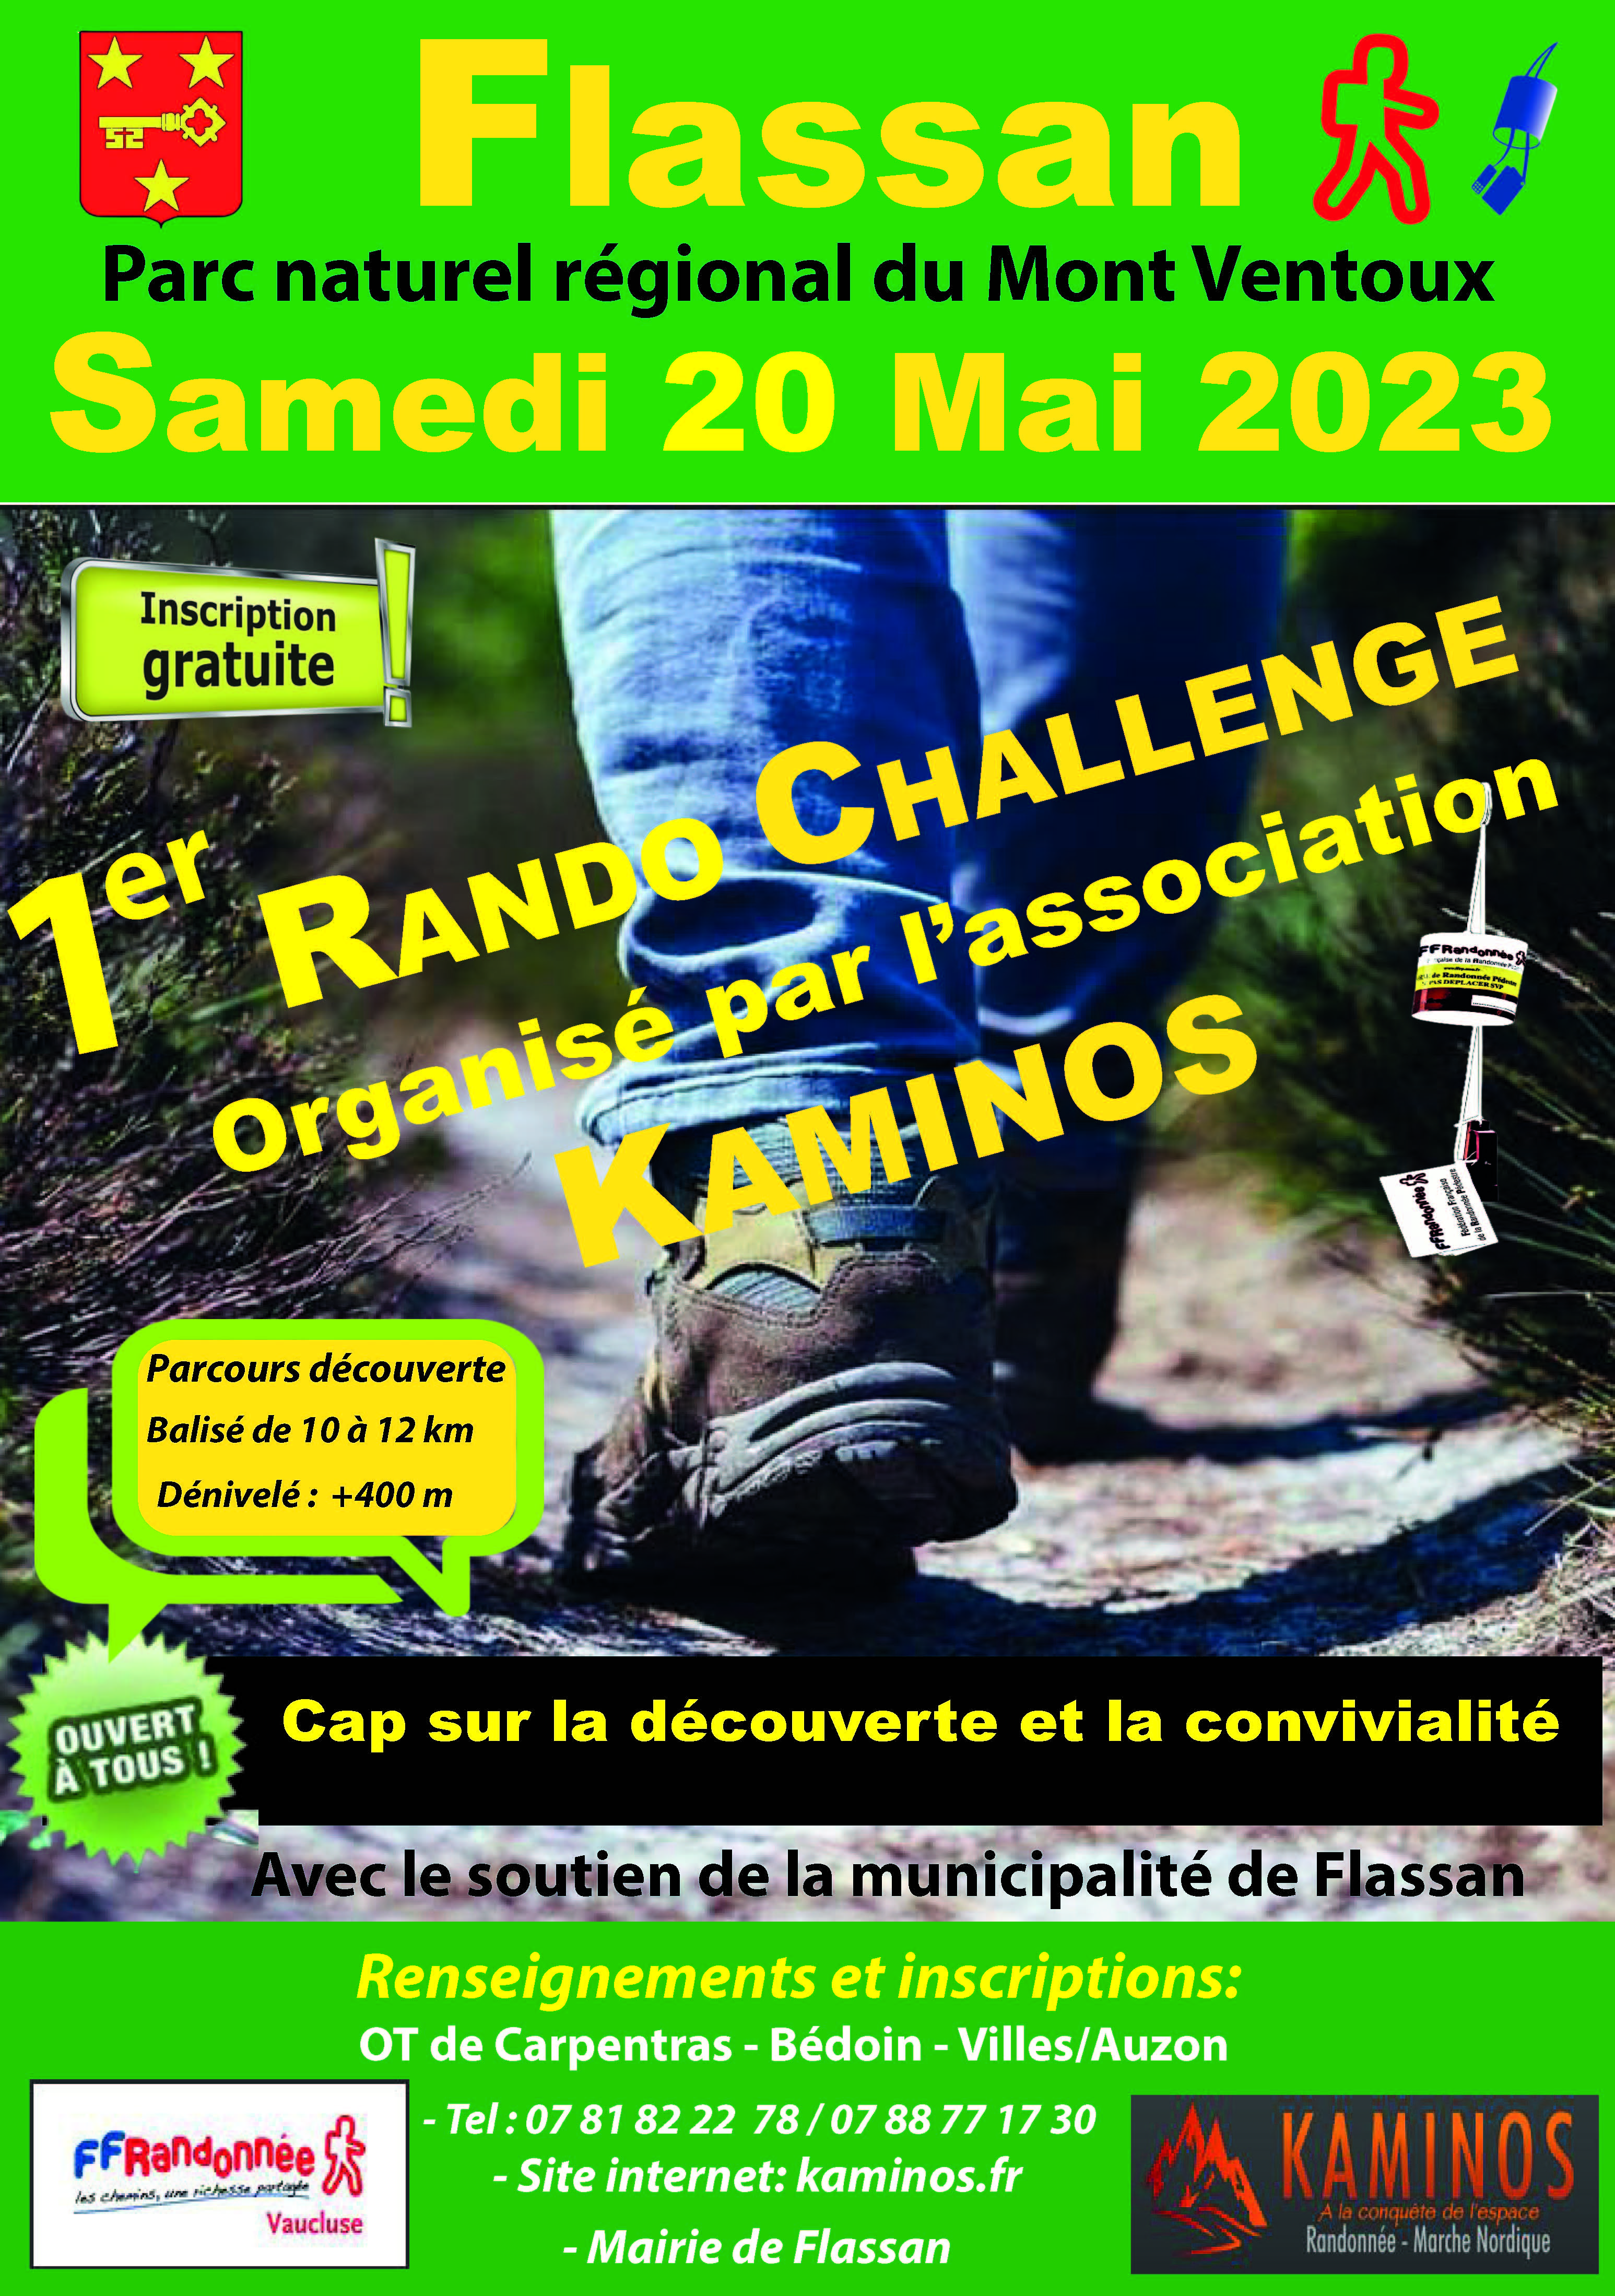 Rando challenge Flassan